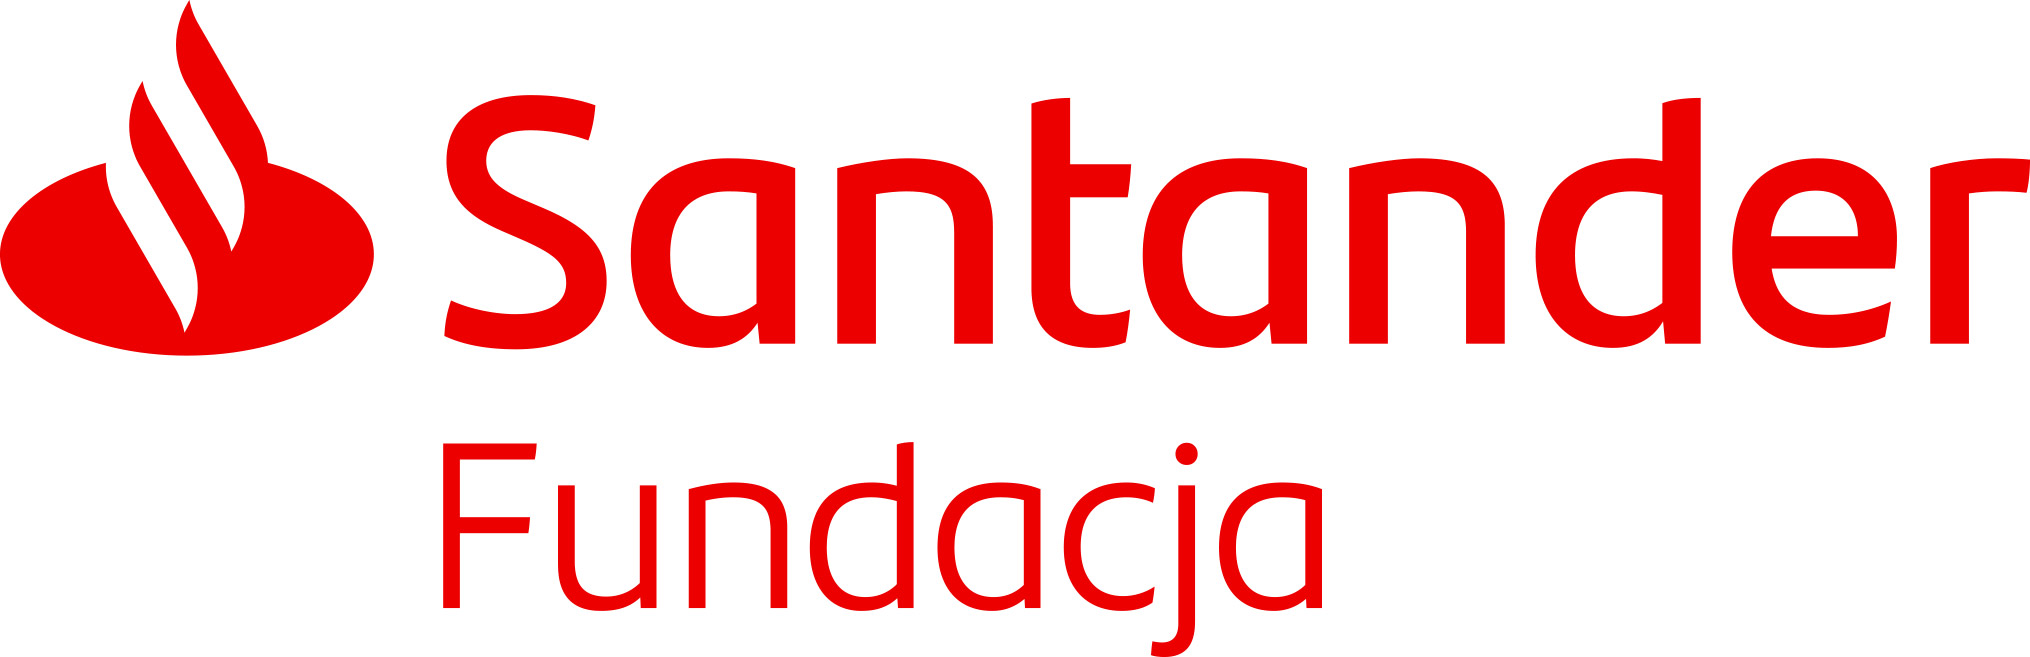 Santander fundacja